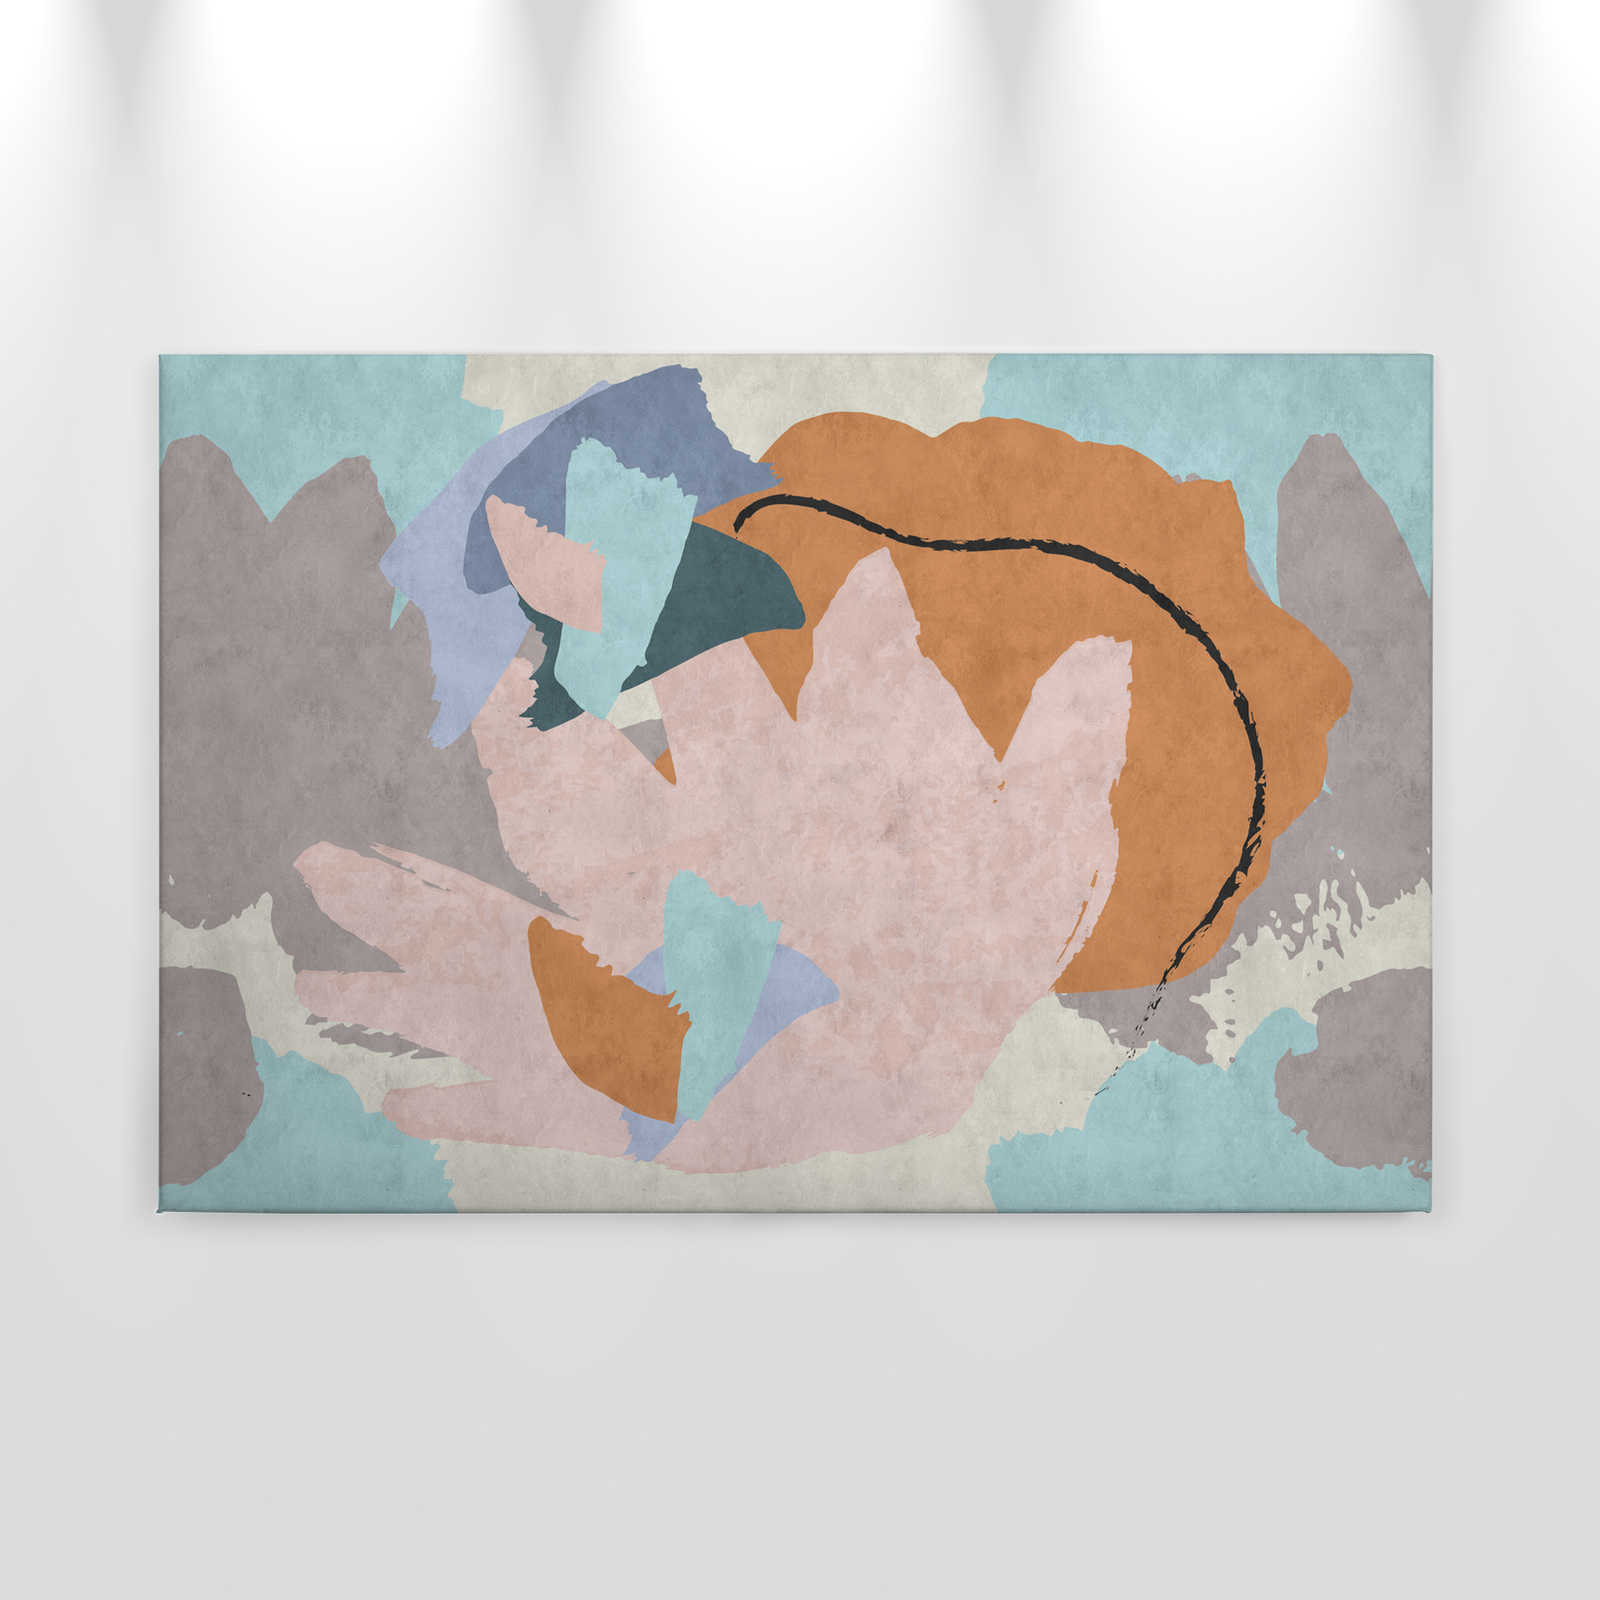             Collage Floral 2 - lienzo moderno arte abstracto en estructura de papel secante - 0,90 m x 0,60 m
        